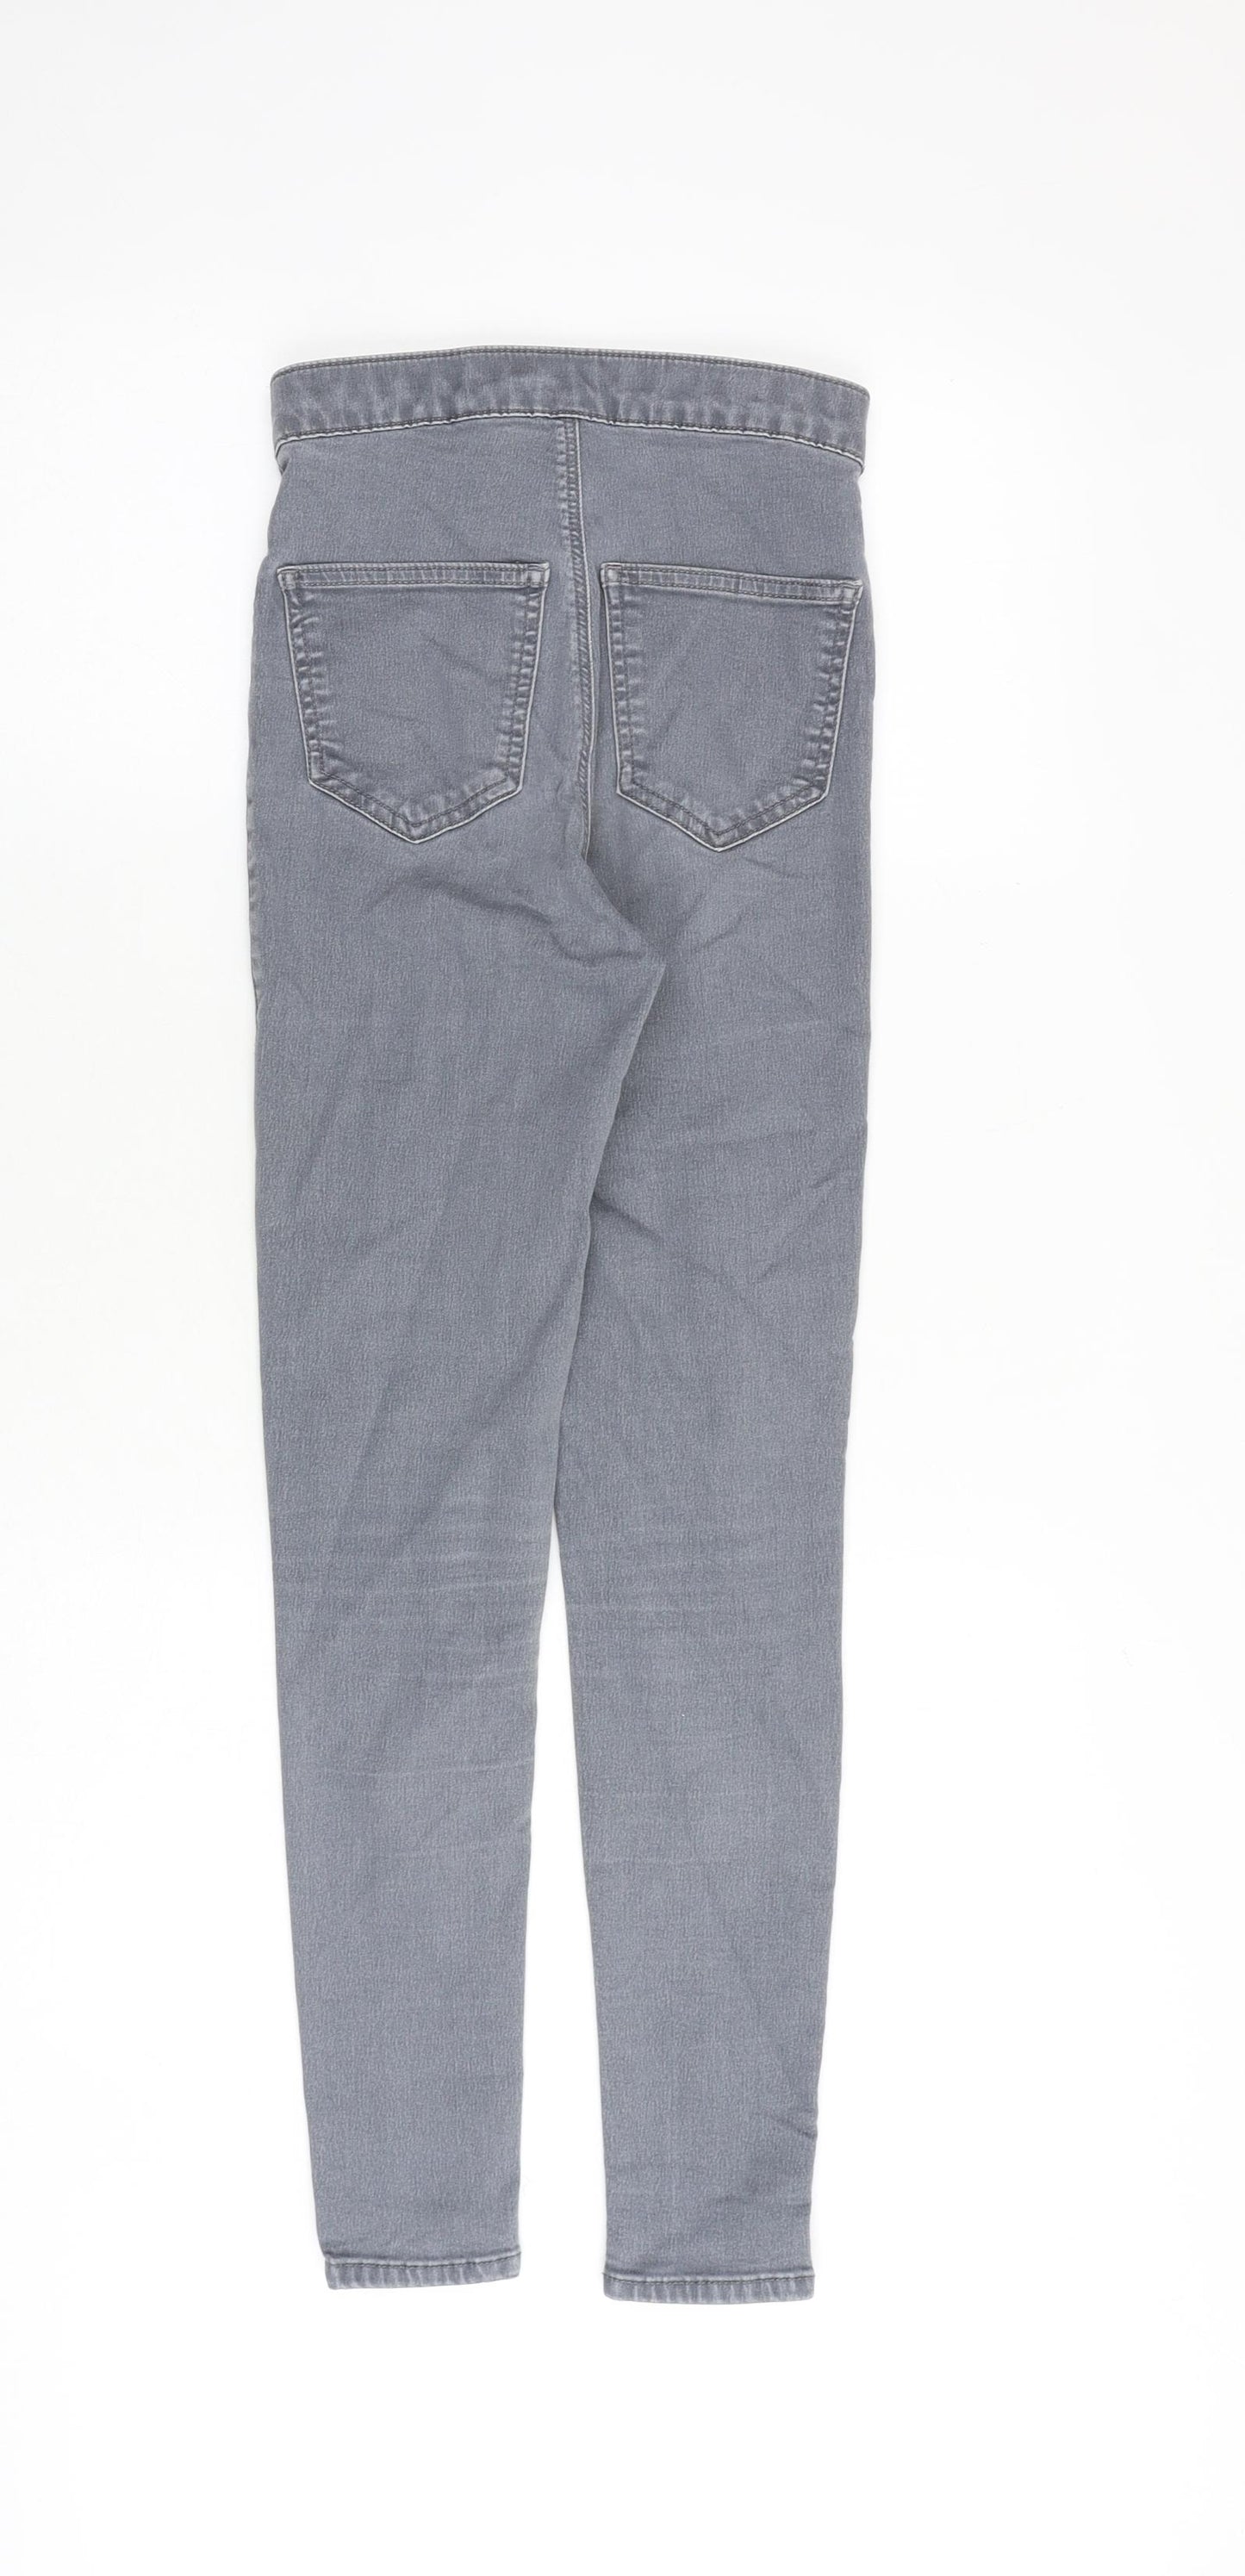 Topshop Womens Grey Cotton Skinny Jeans Size 25 in L30 in Regular Zip